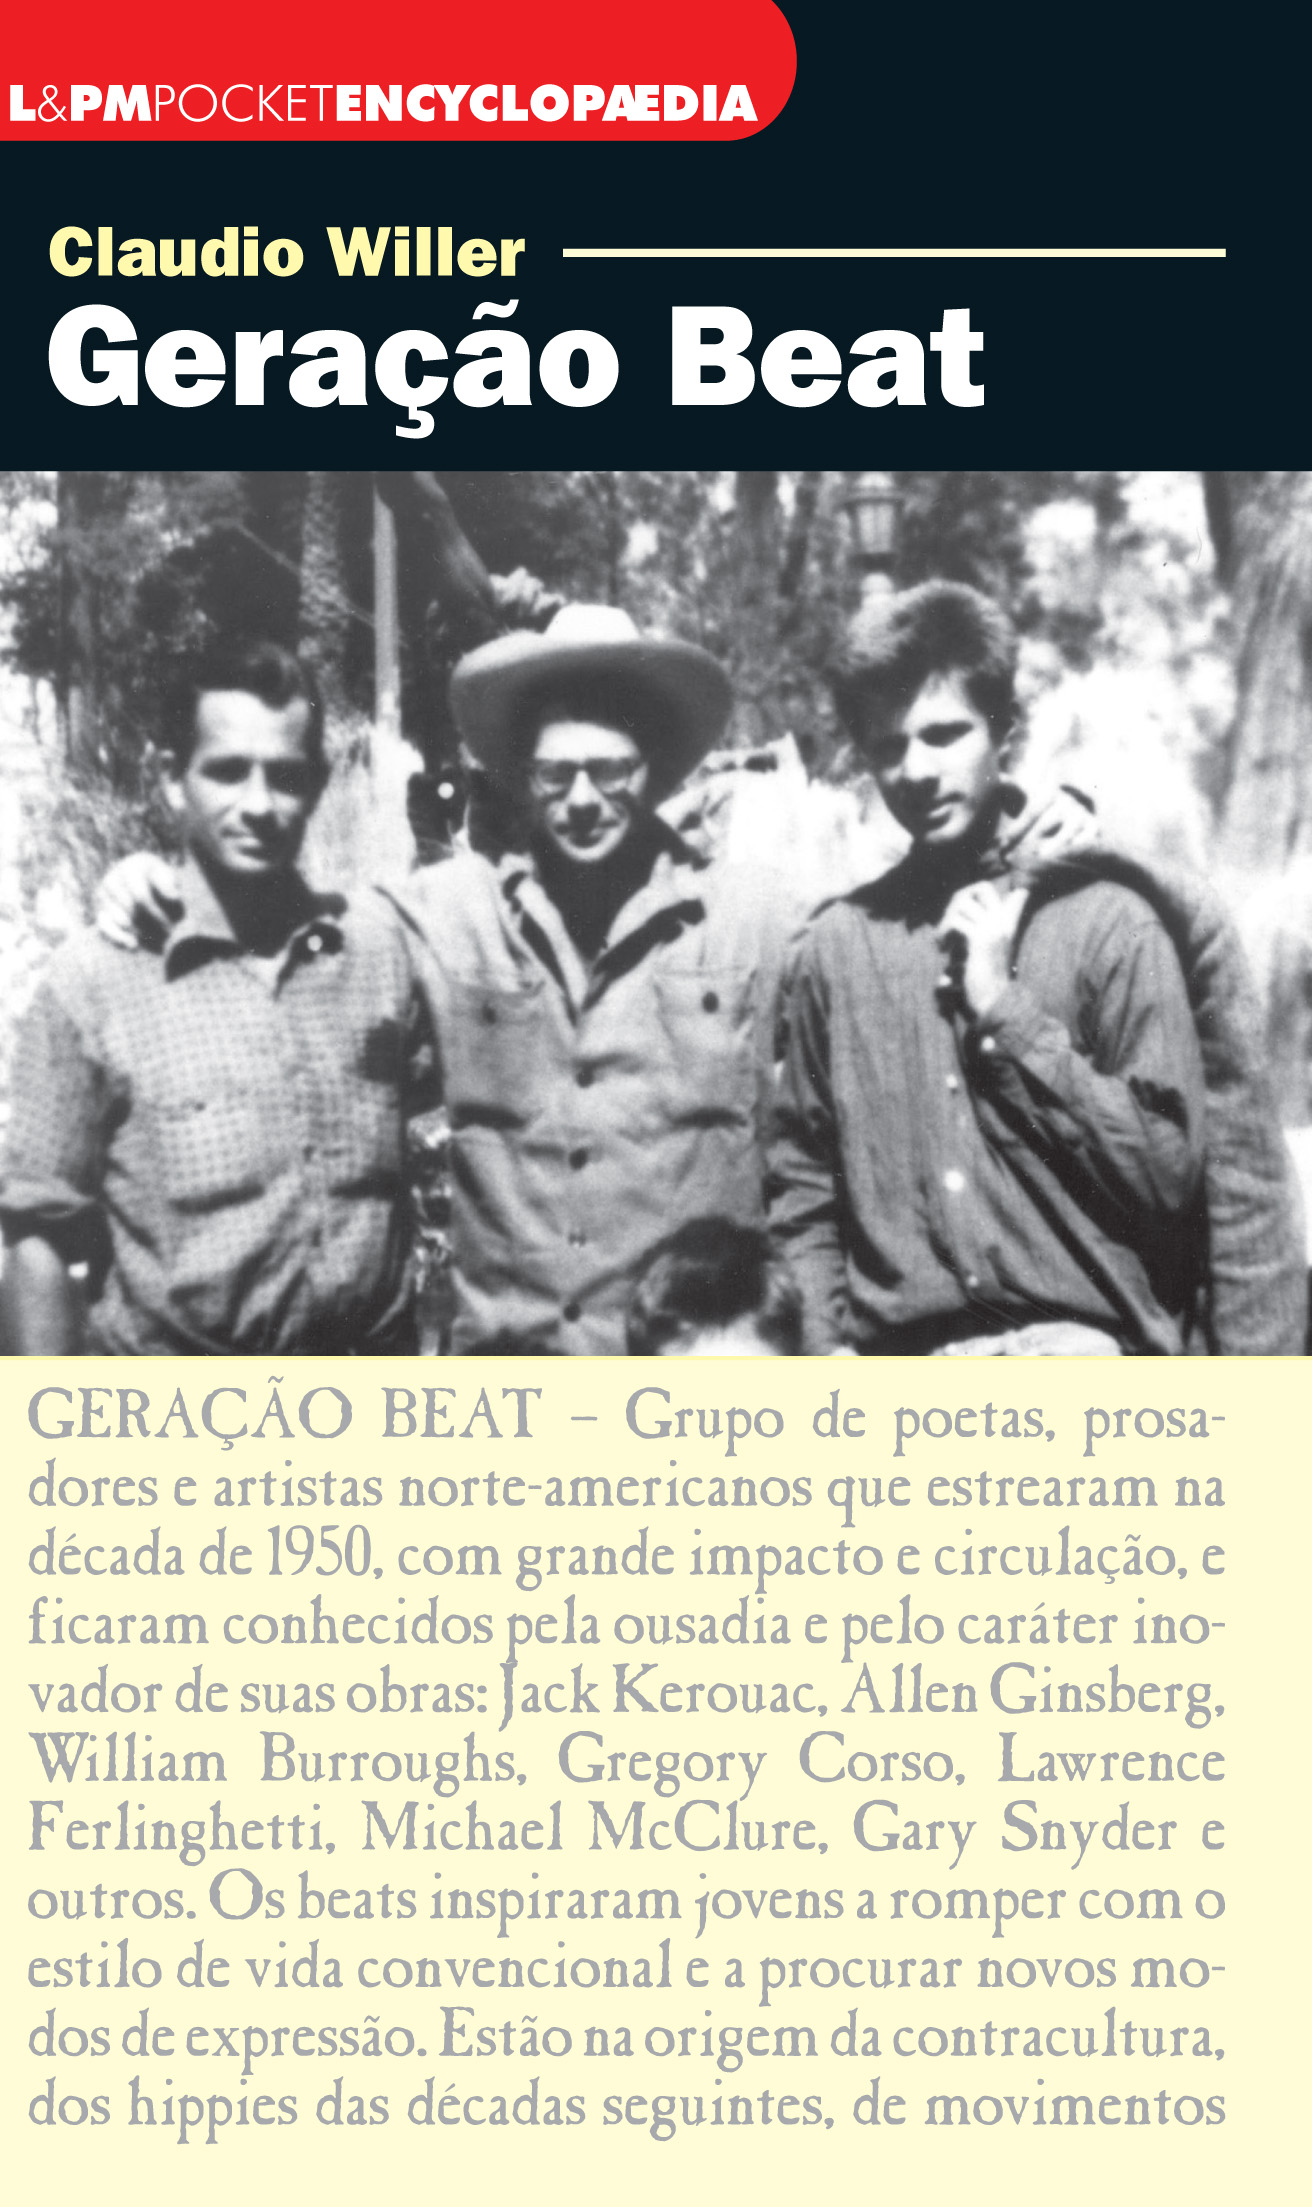 Geração Beat (Português language, 2009, L&PM Pocket)